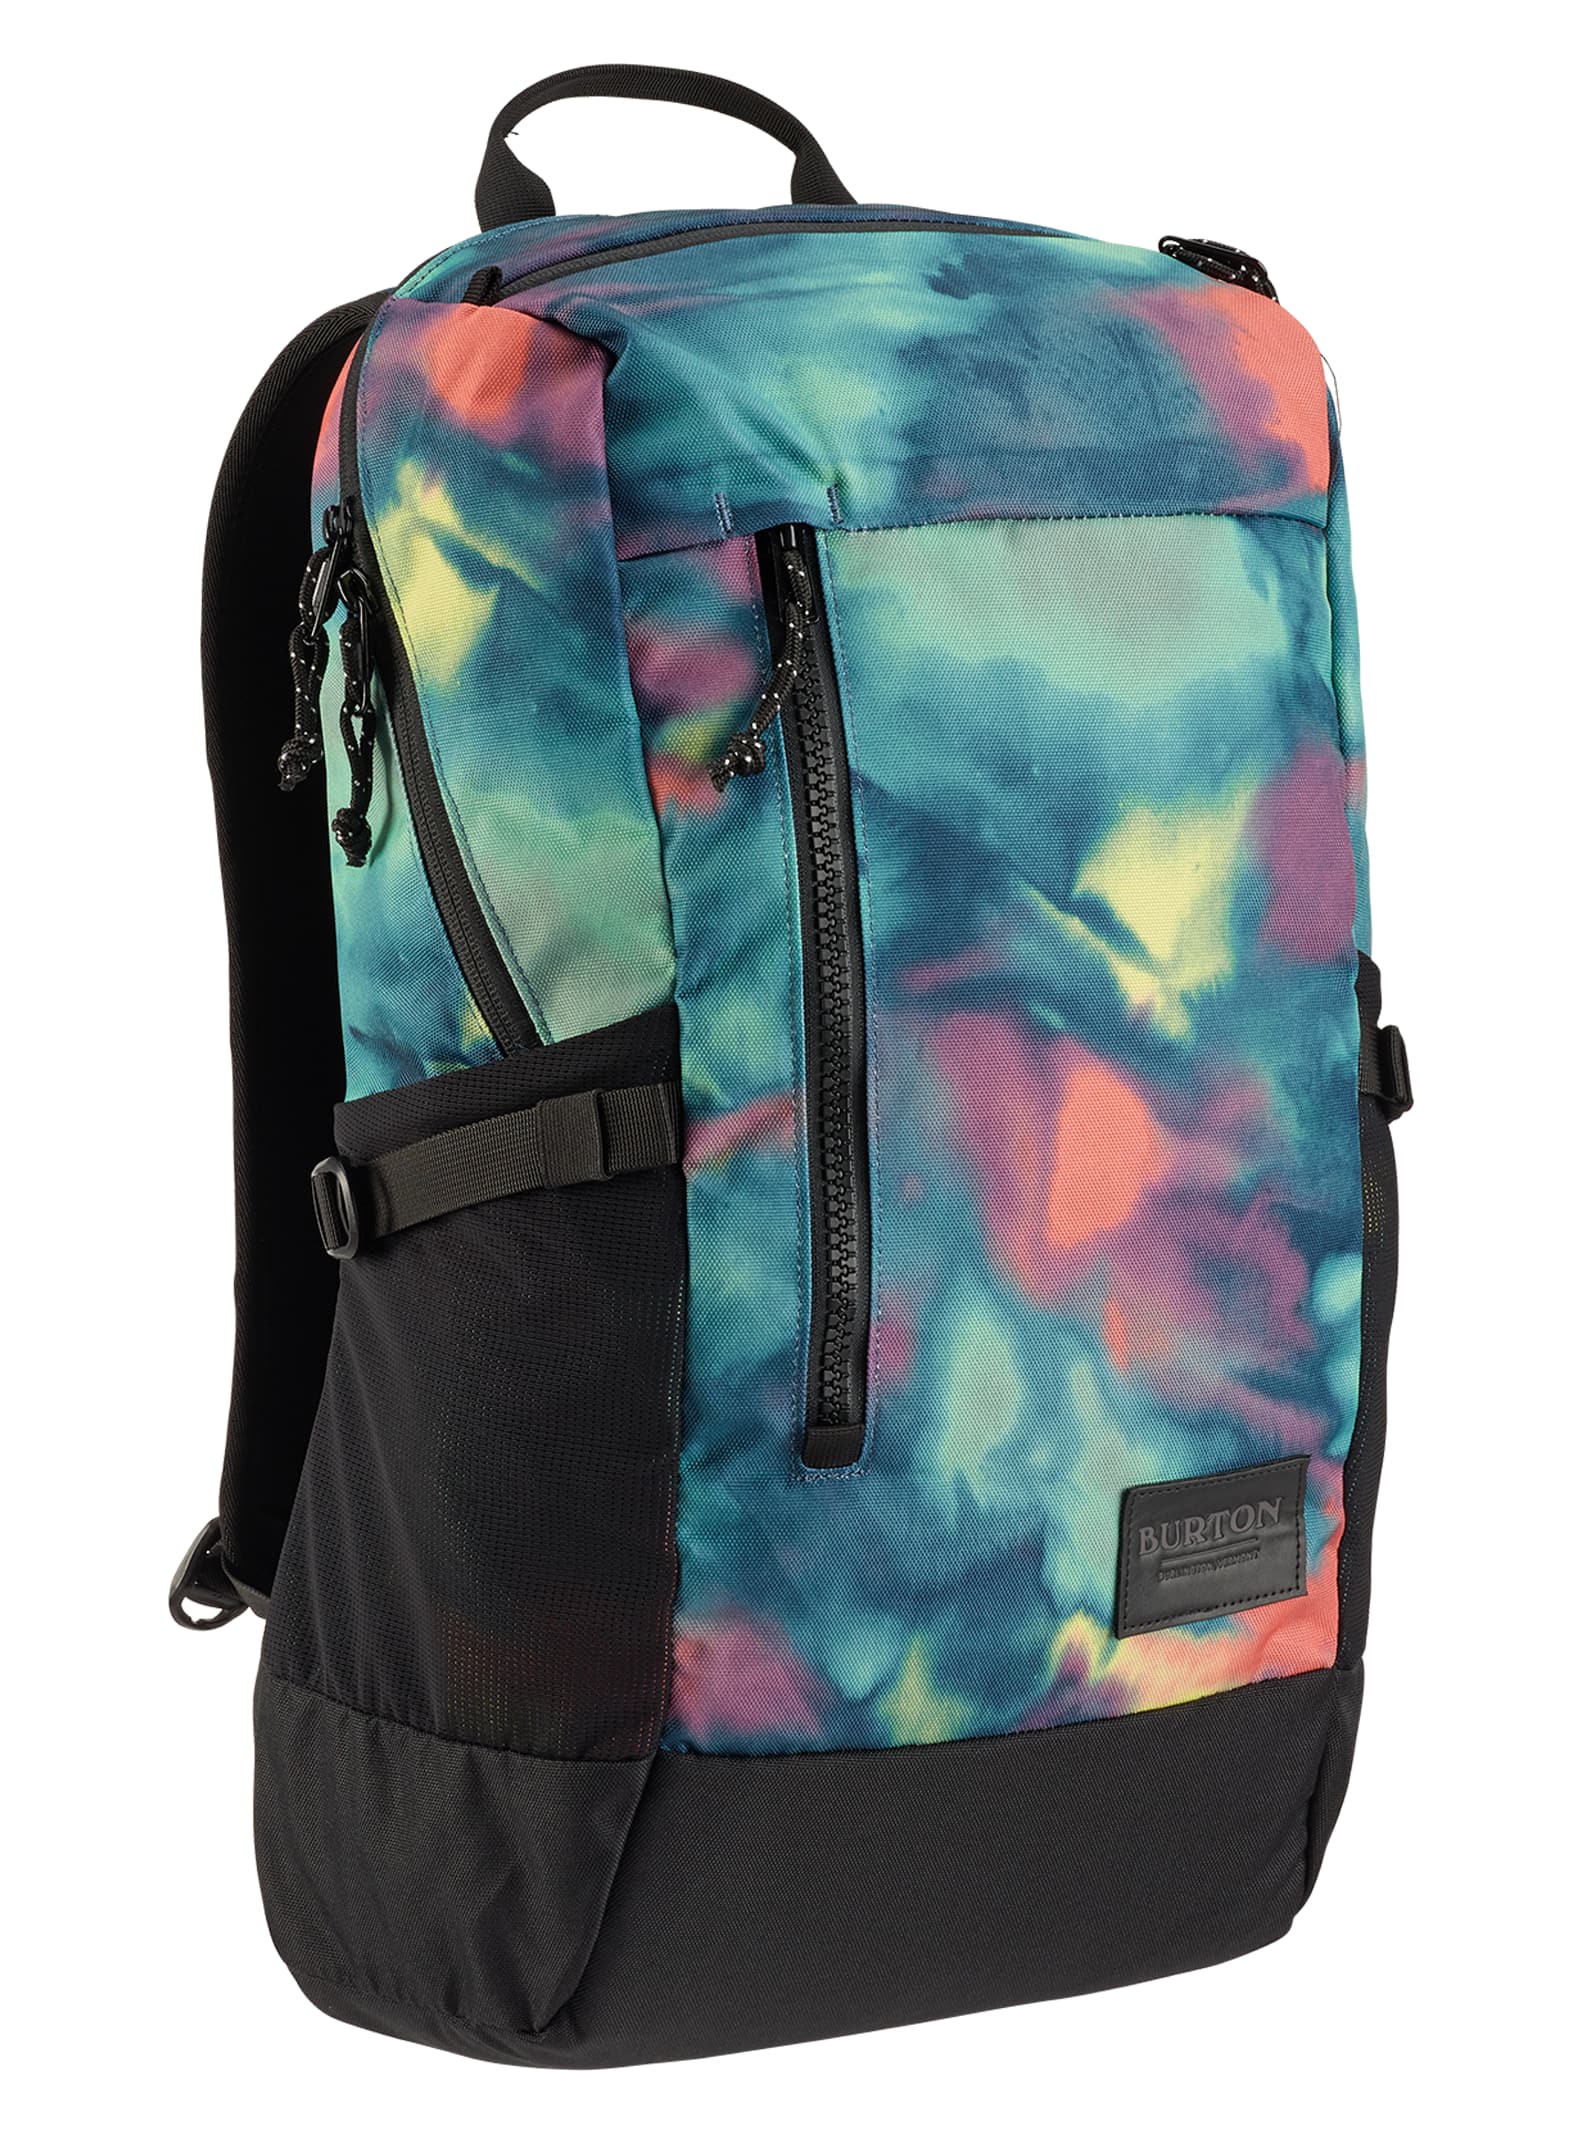 Burton Prospect 2.0 20L Backpack | Burton.com Spring 2020 US